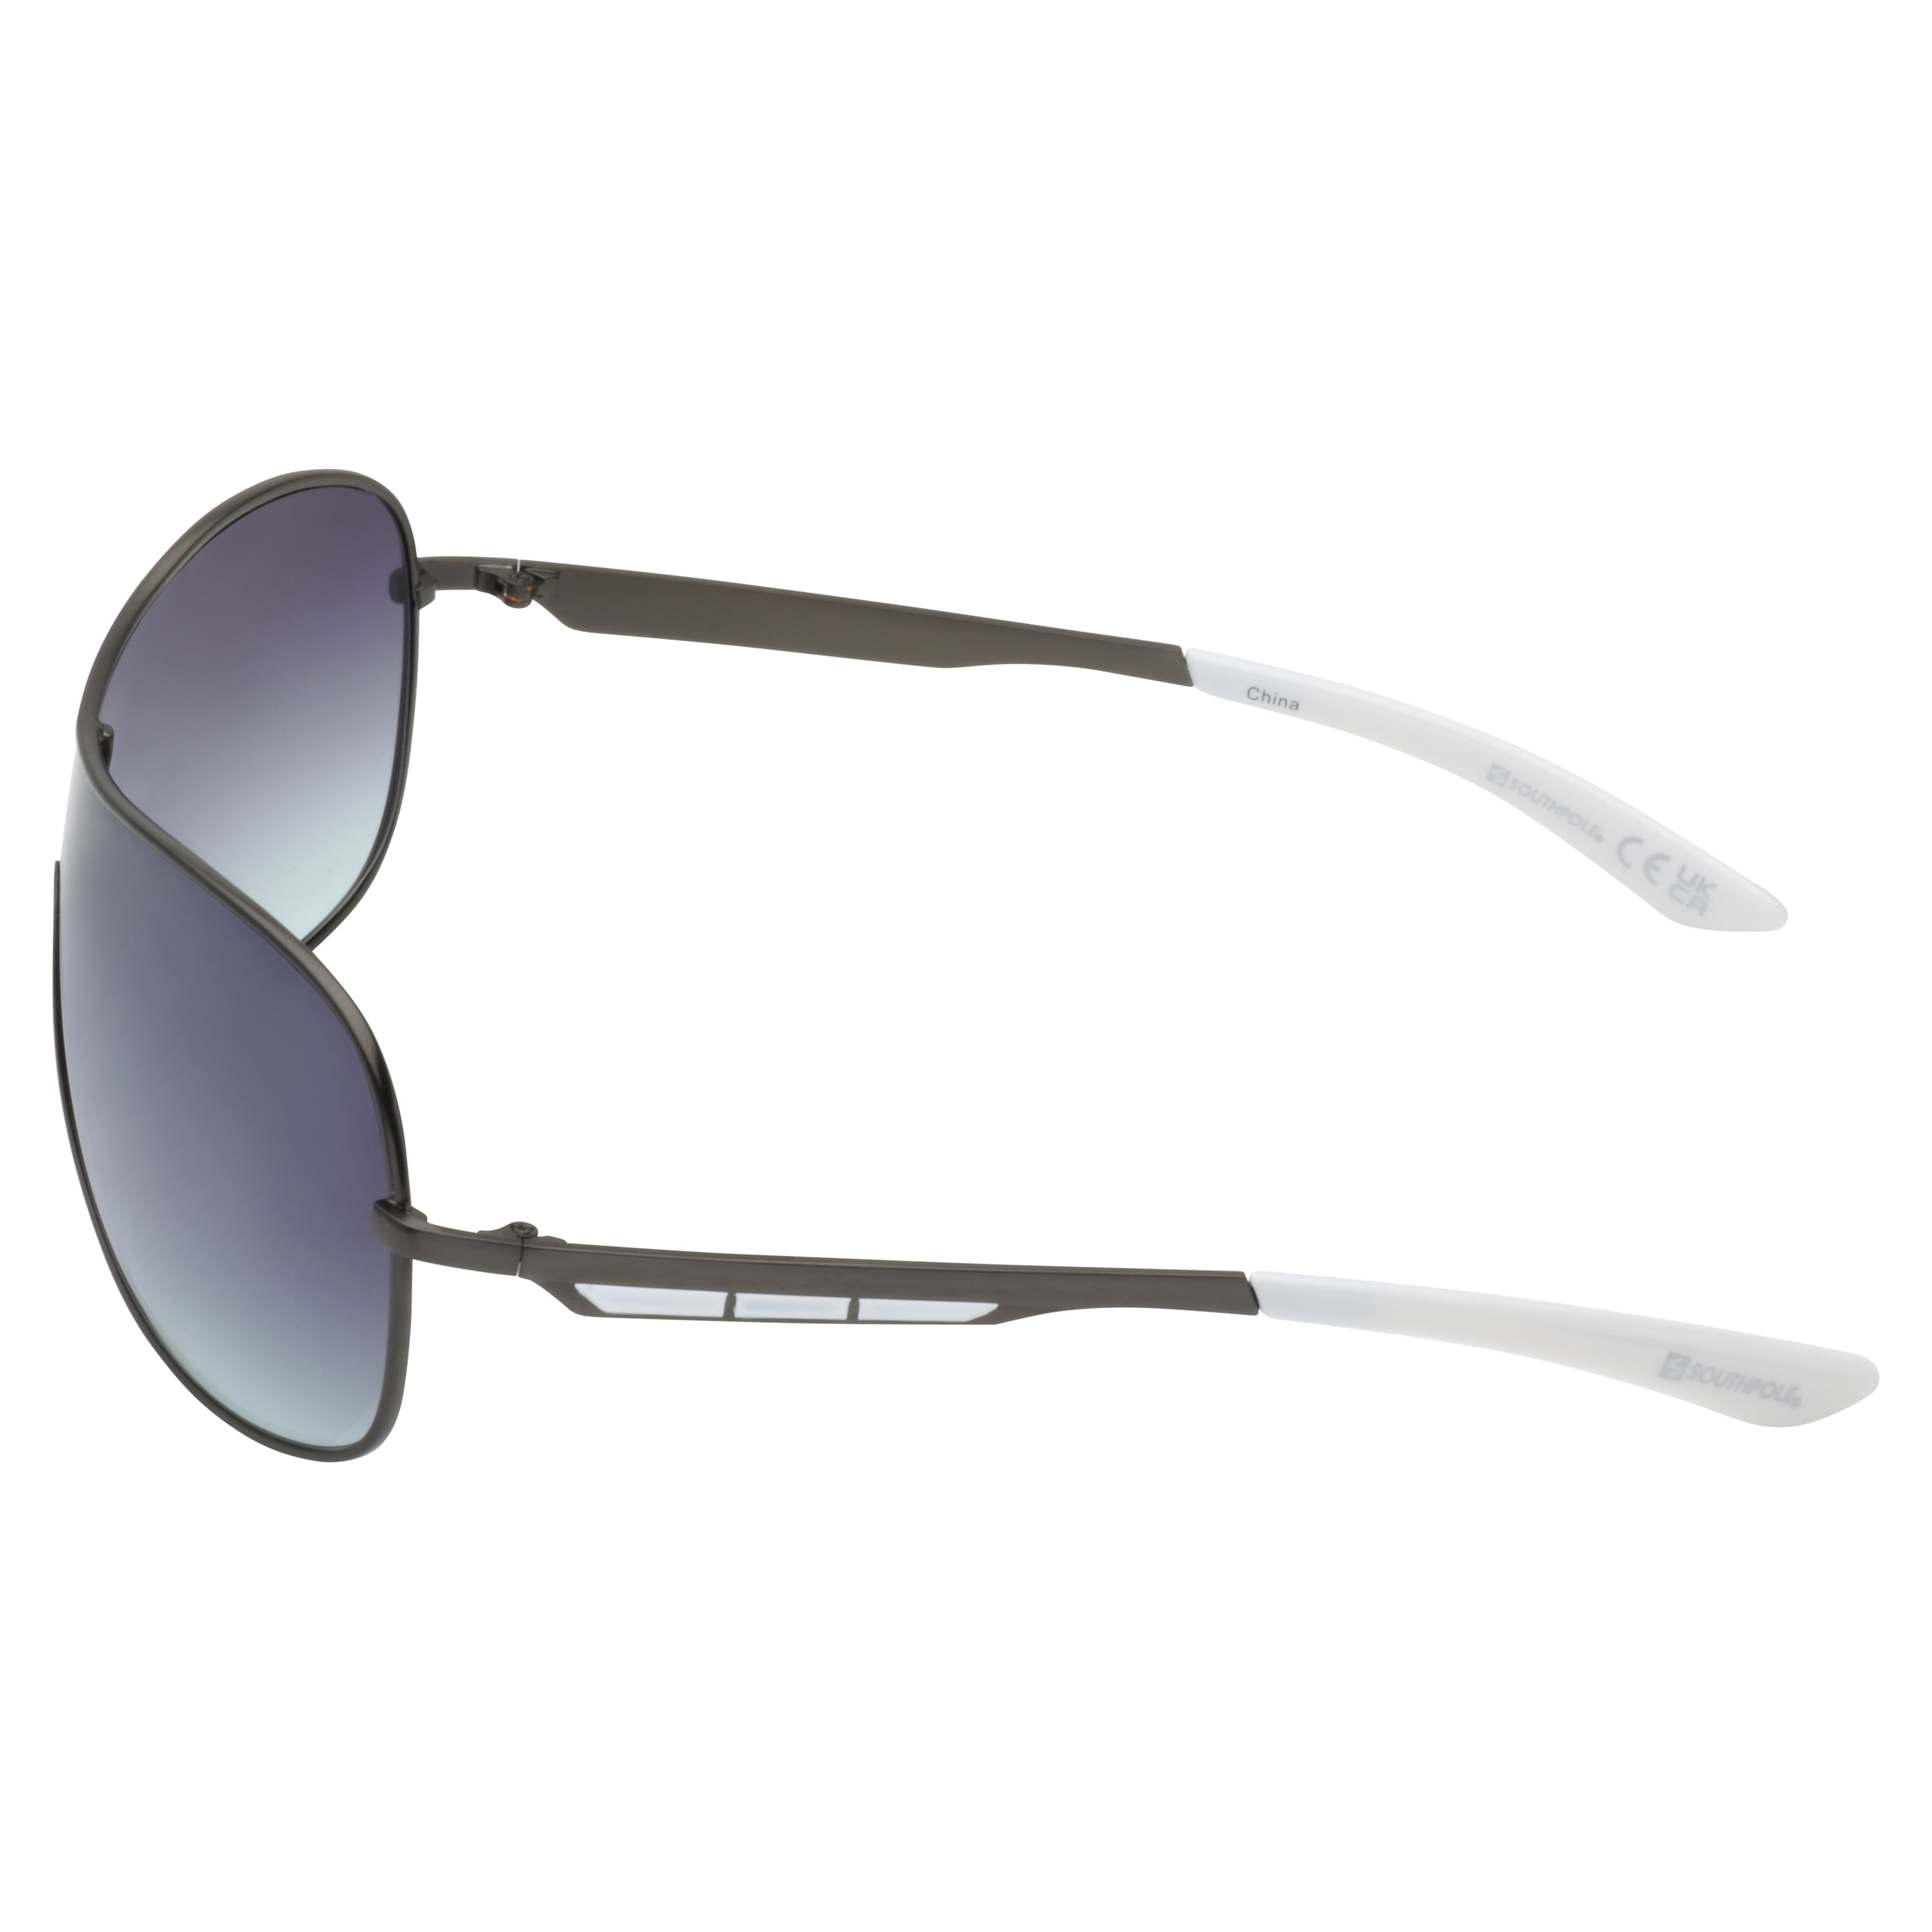 WOWSUN Rectangular Polarized Sunglasses for Men Metal Frame Cool